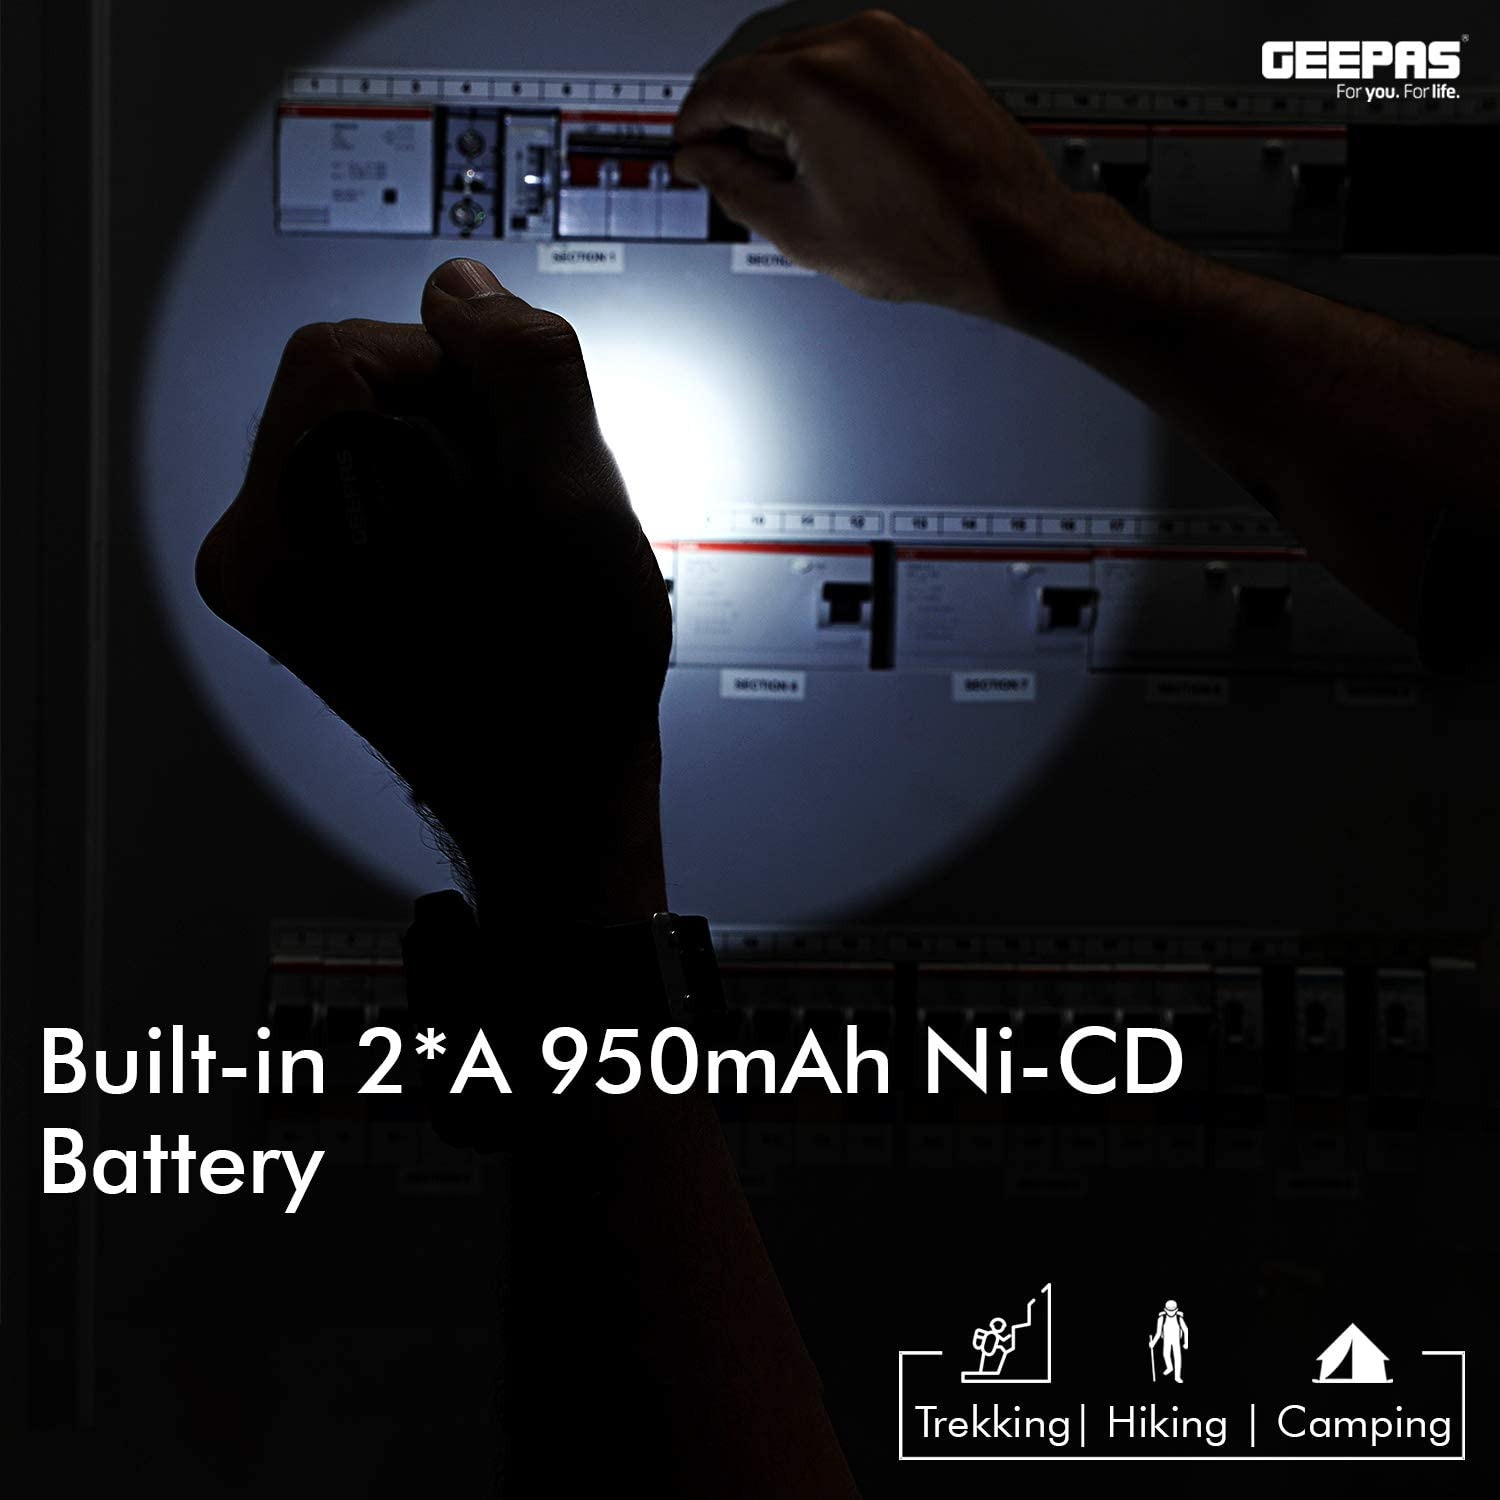 Geepas GFL4659 | Rechargeable LED Flashlight